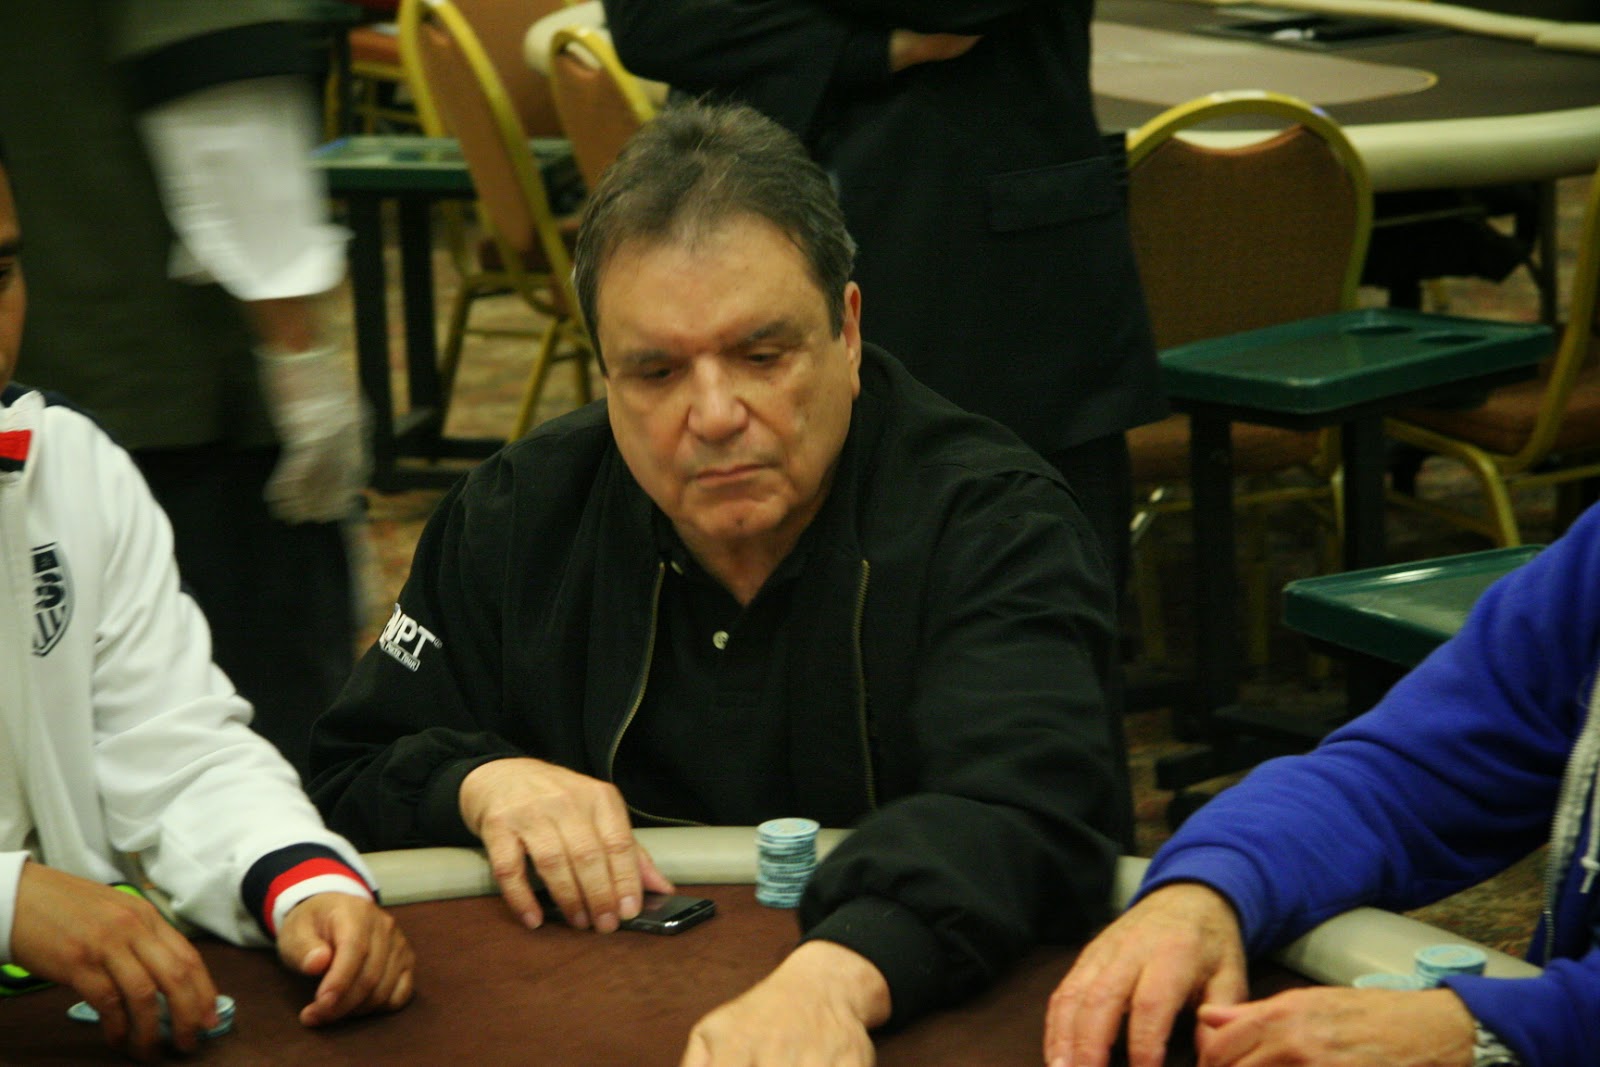 ‘Miami’ John Cernuto Passes Men Nguyen for Most Career Live Poker Tournament Cashes in History